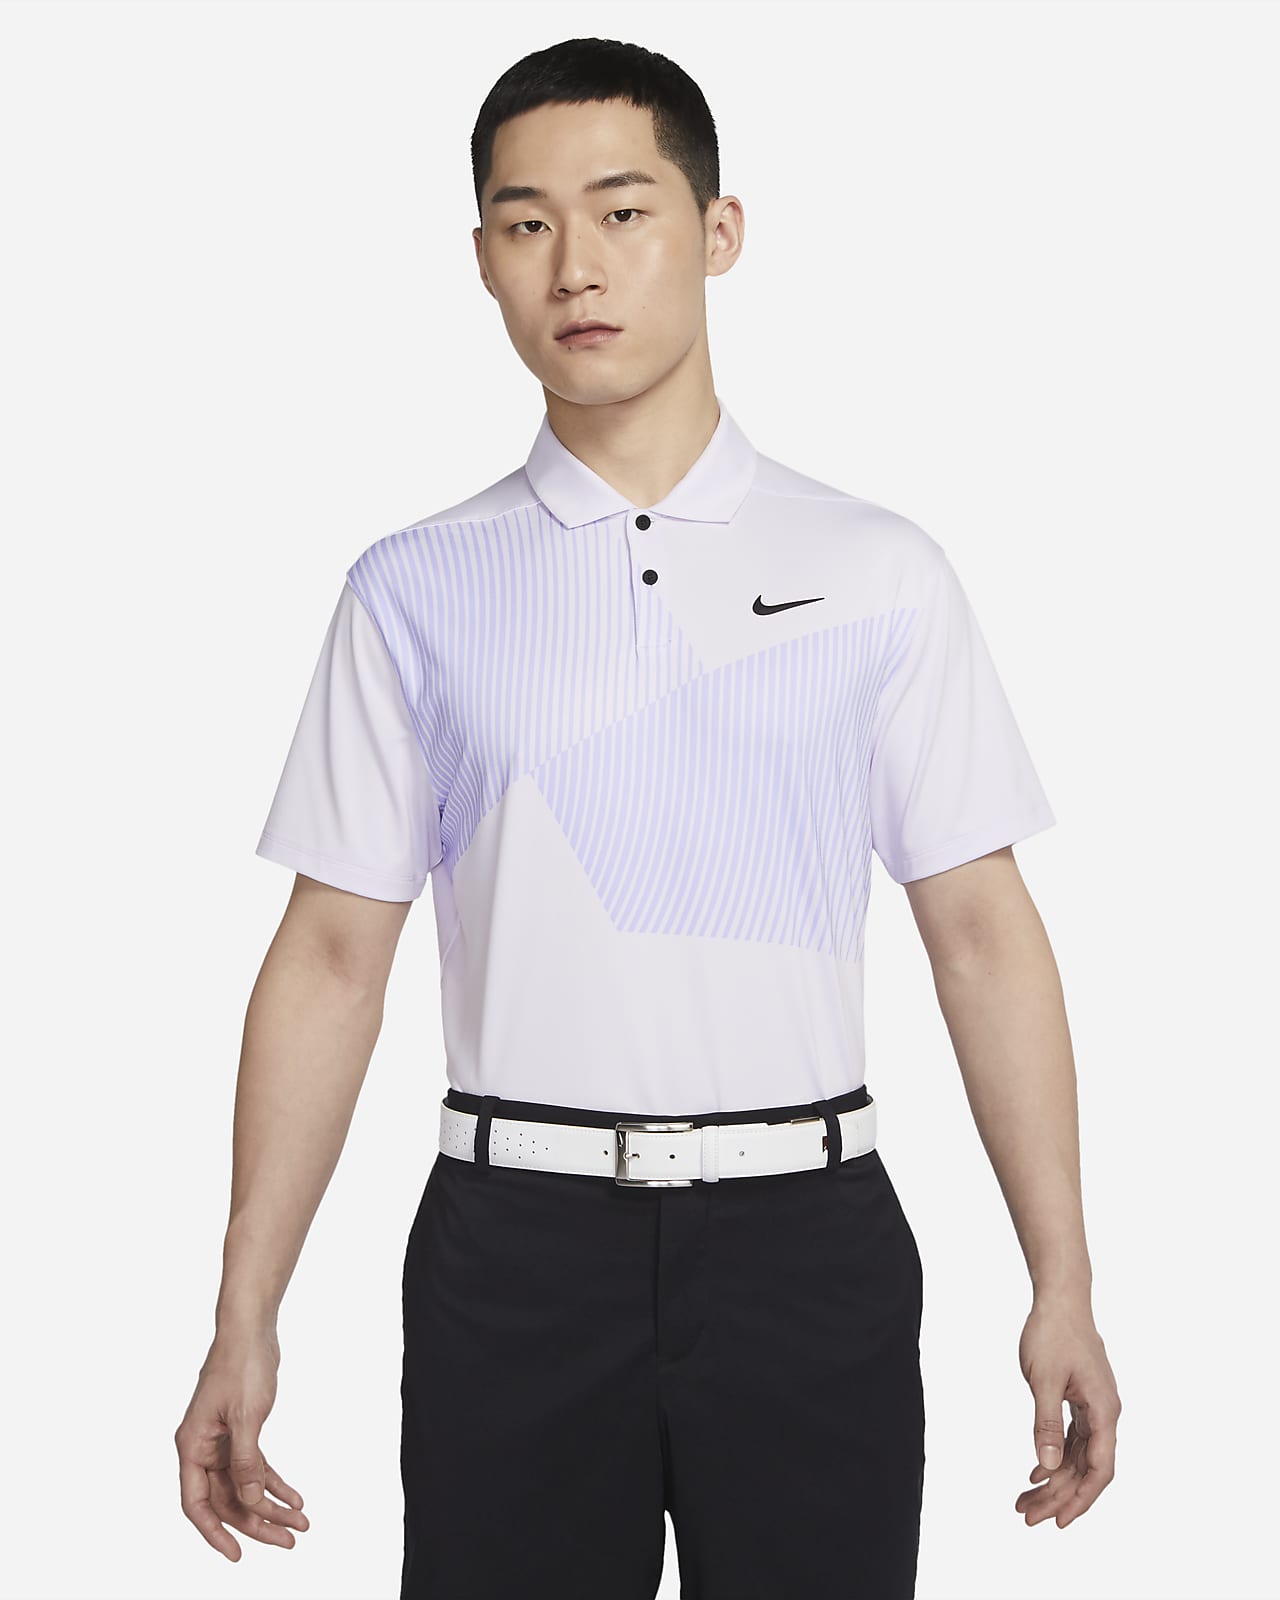 Nike Dri-FIT Vapor Men's Print Golf Polo. Nike SG